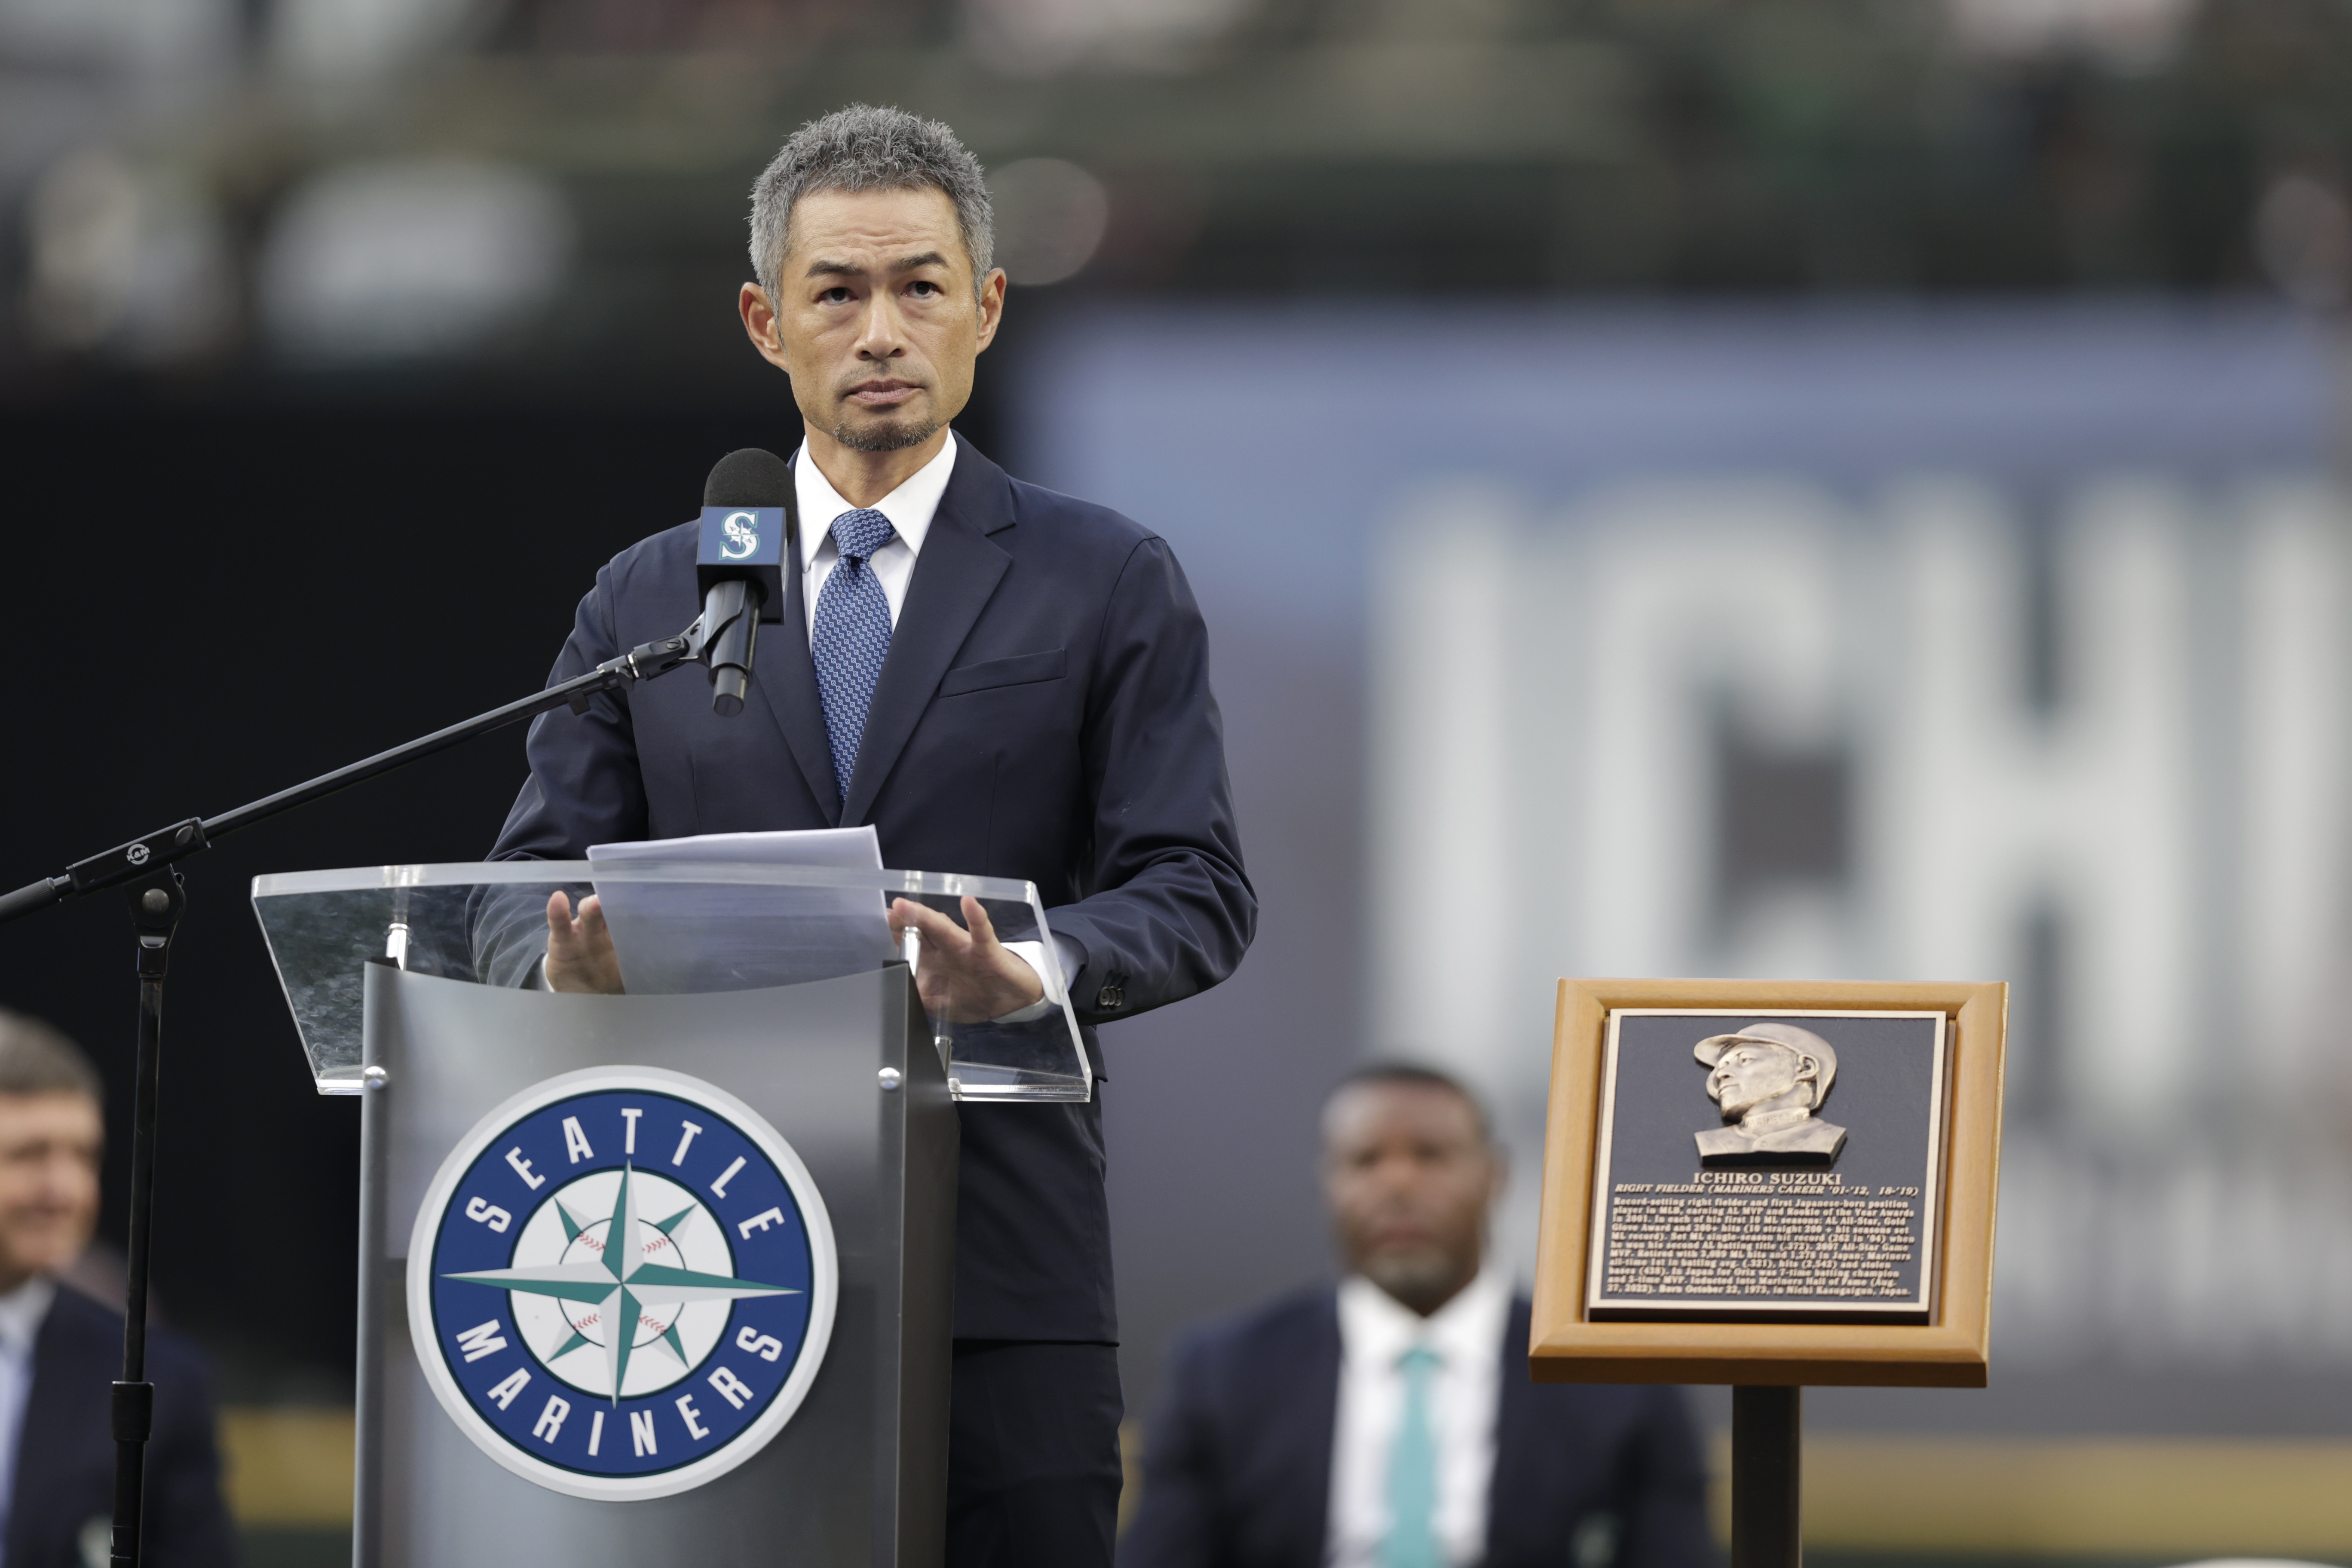 Ichiro Suzuki retires to ovation after sparkling 27-year baseball career, MLB